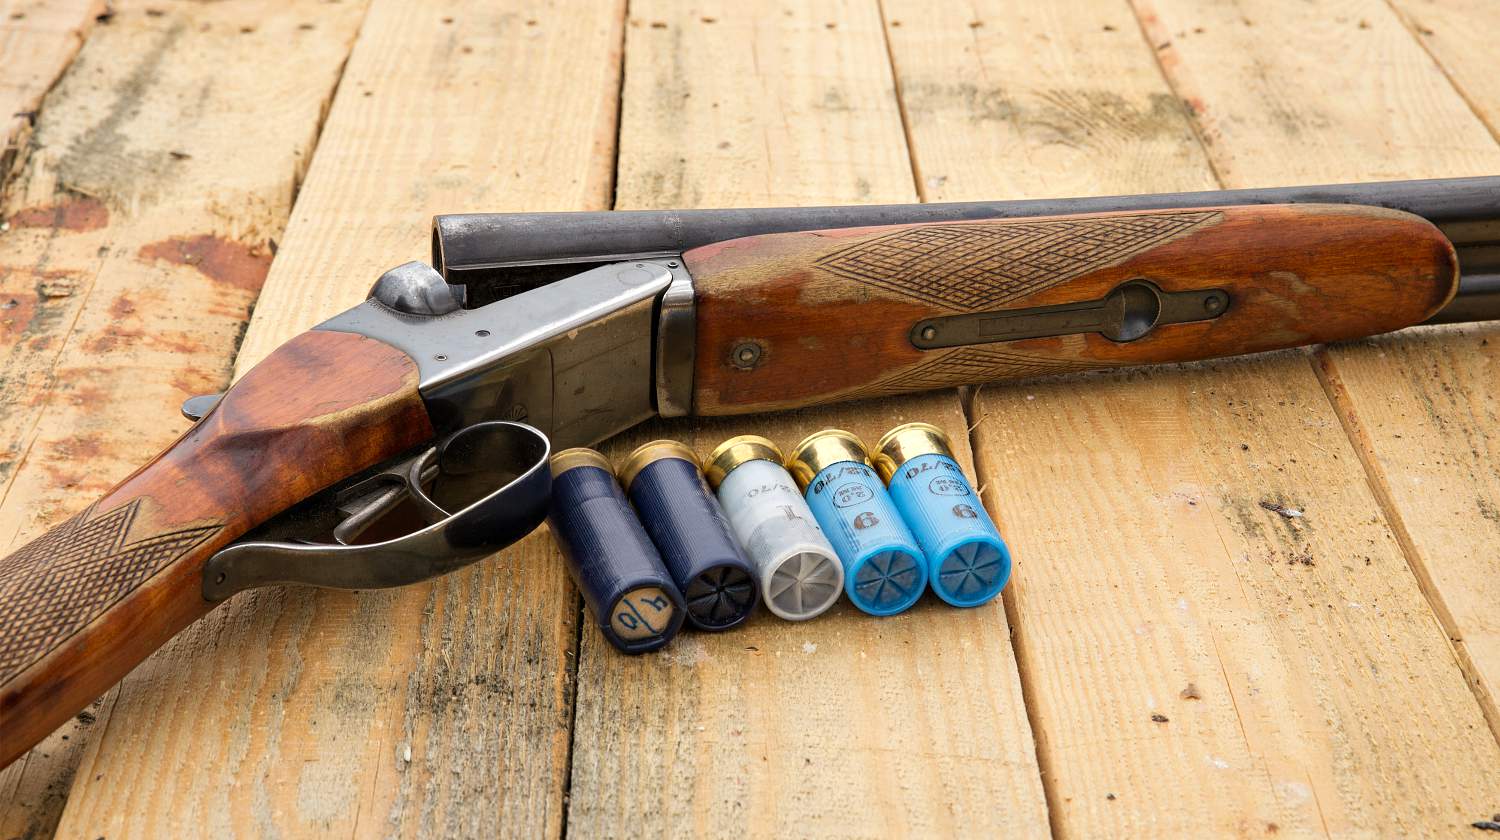 Feature | Double shotgun and ammo | Shotgun Ammo For Home Defense | Buckshot vs Birdshot